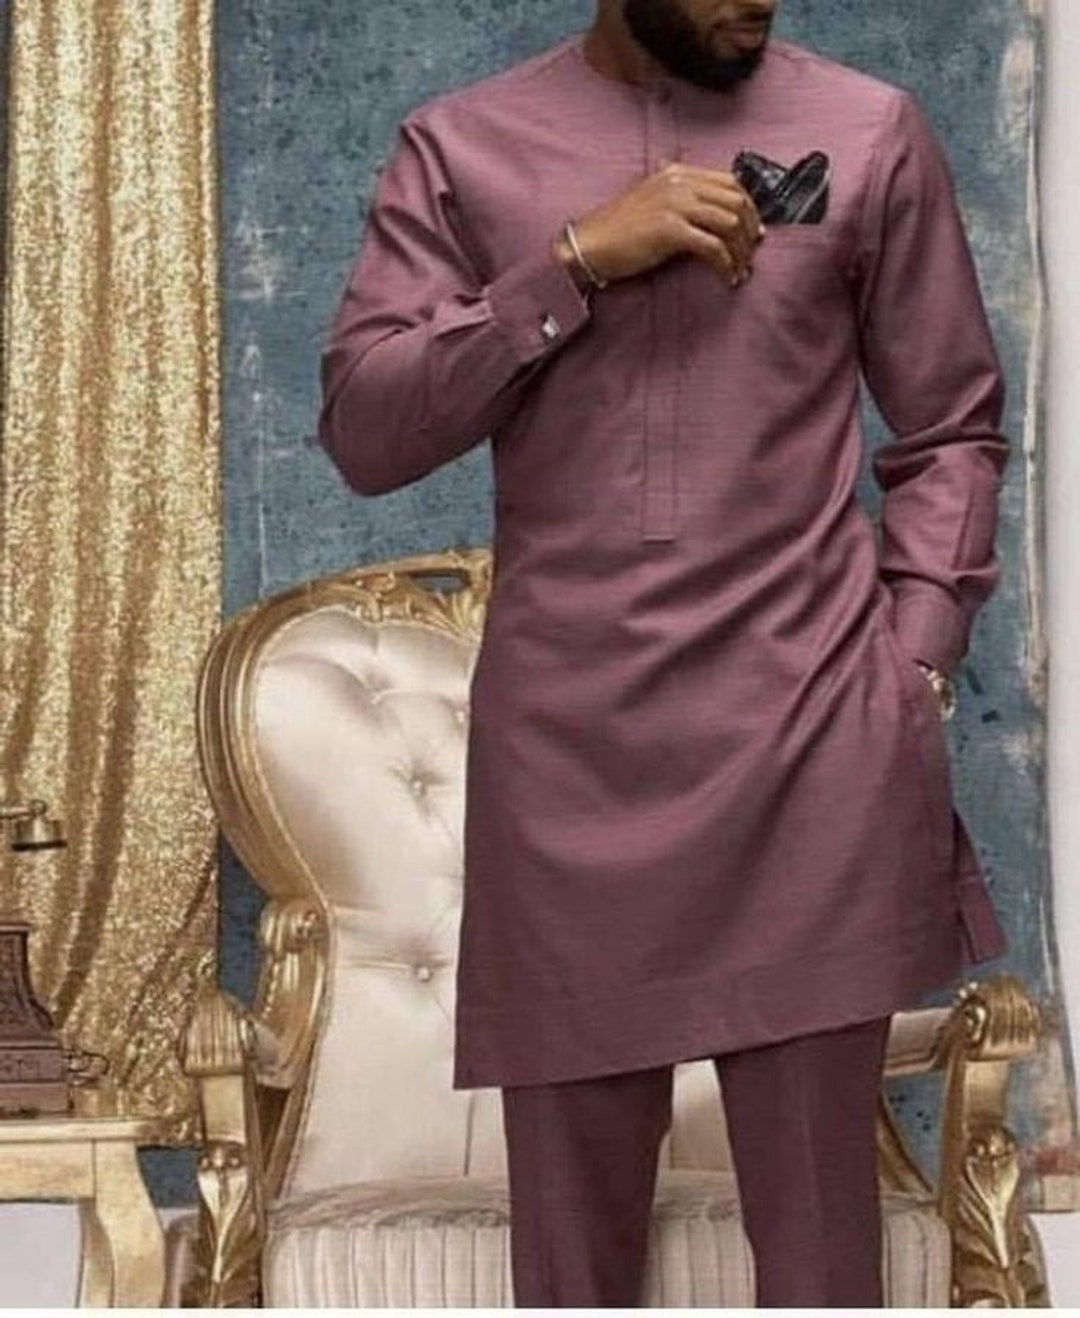 2022 Latest Men Senator Styles for Weddings - 9JAINFORMED  African shirts  for men, Latest african men fashion, African clothing for men